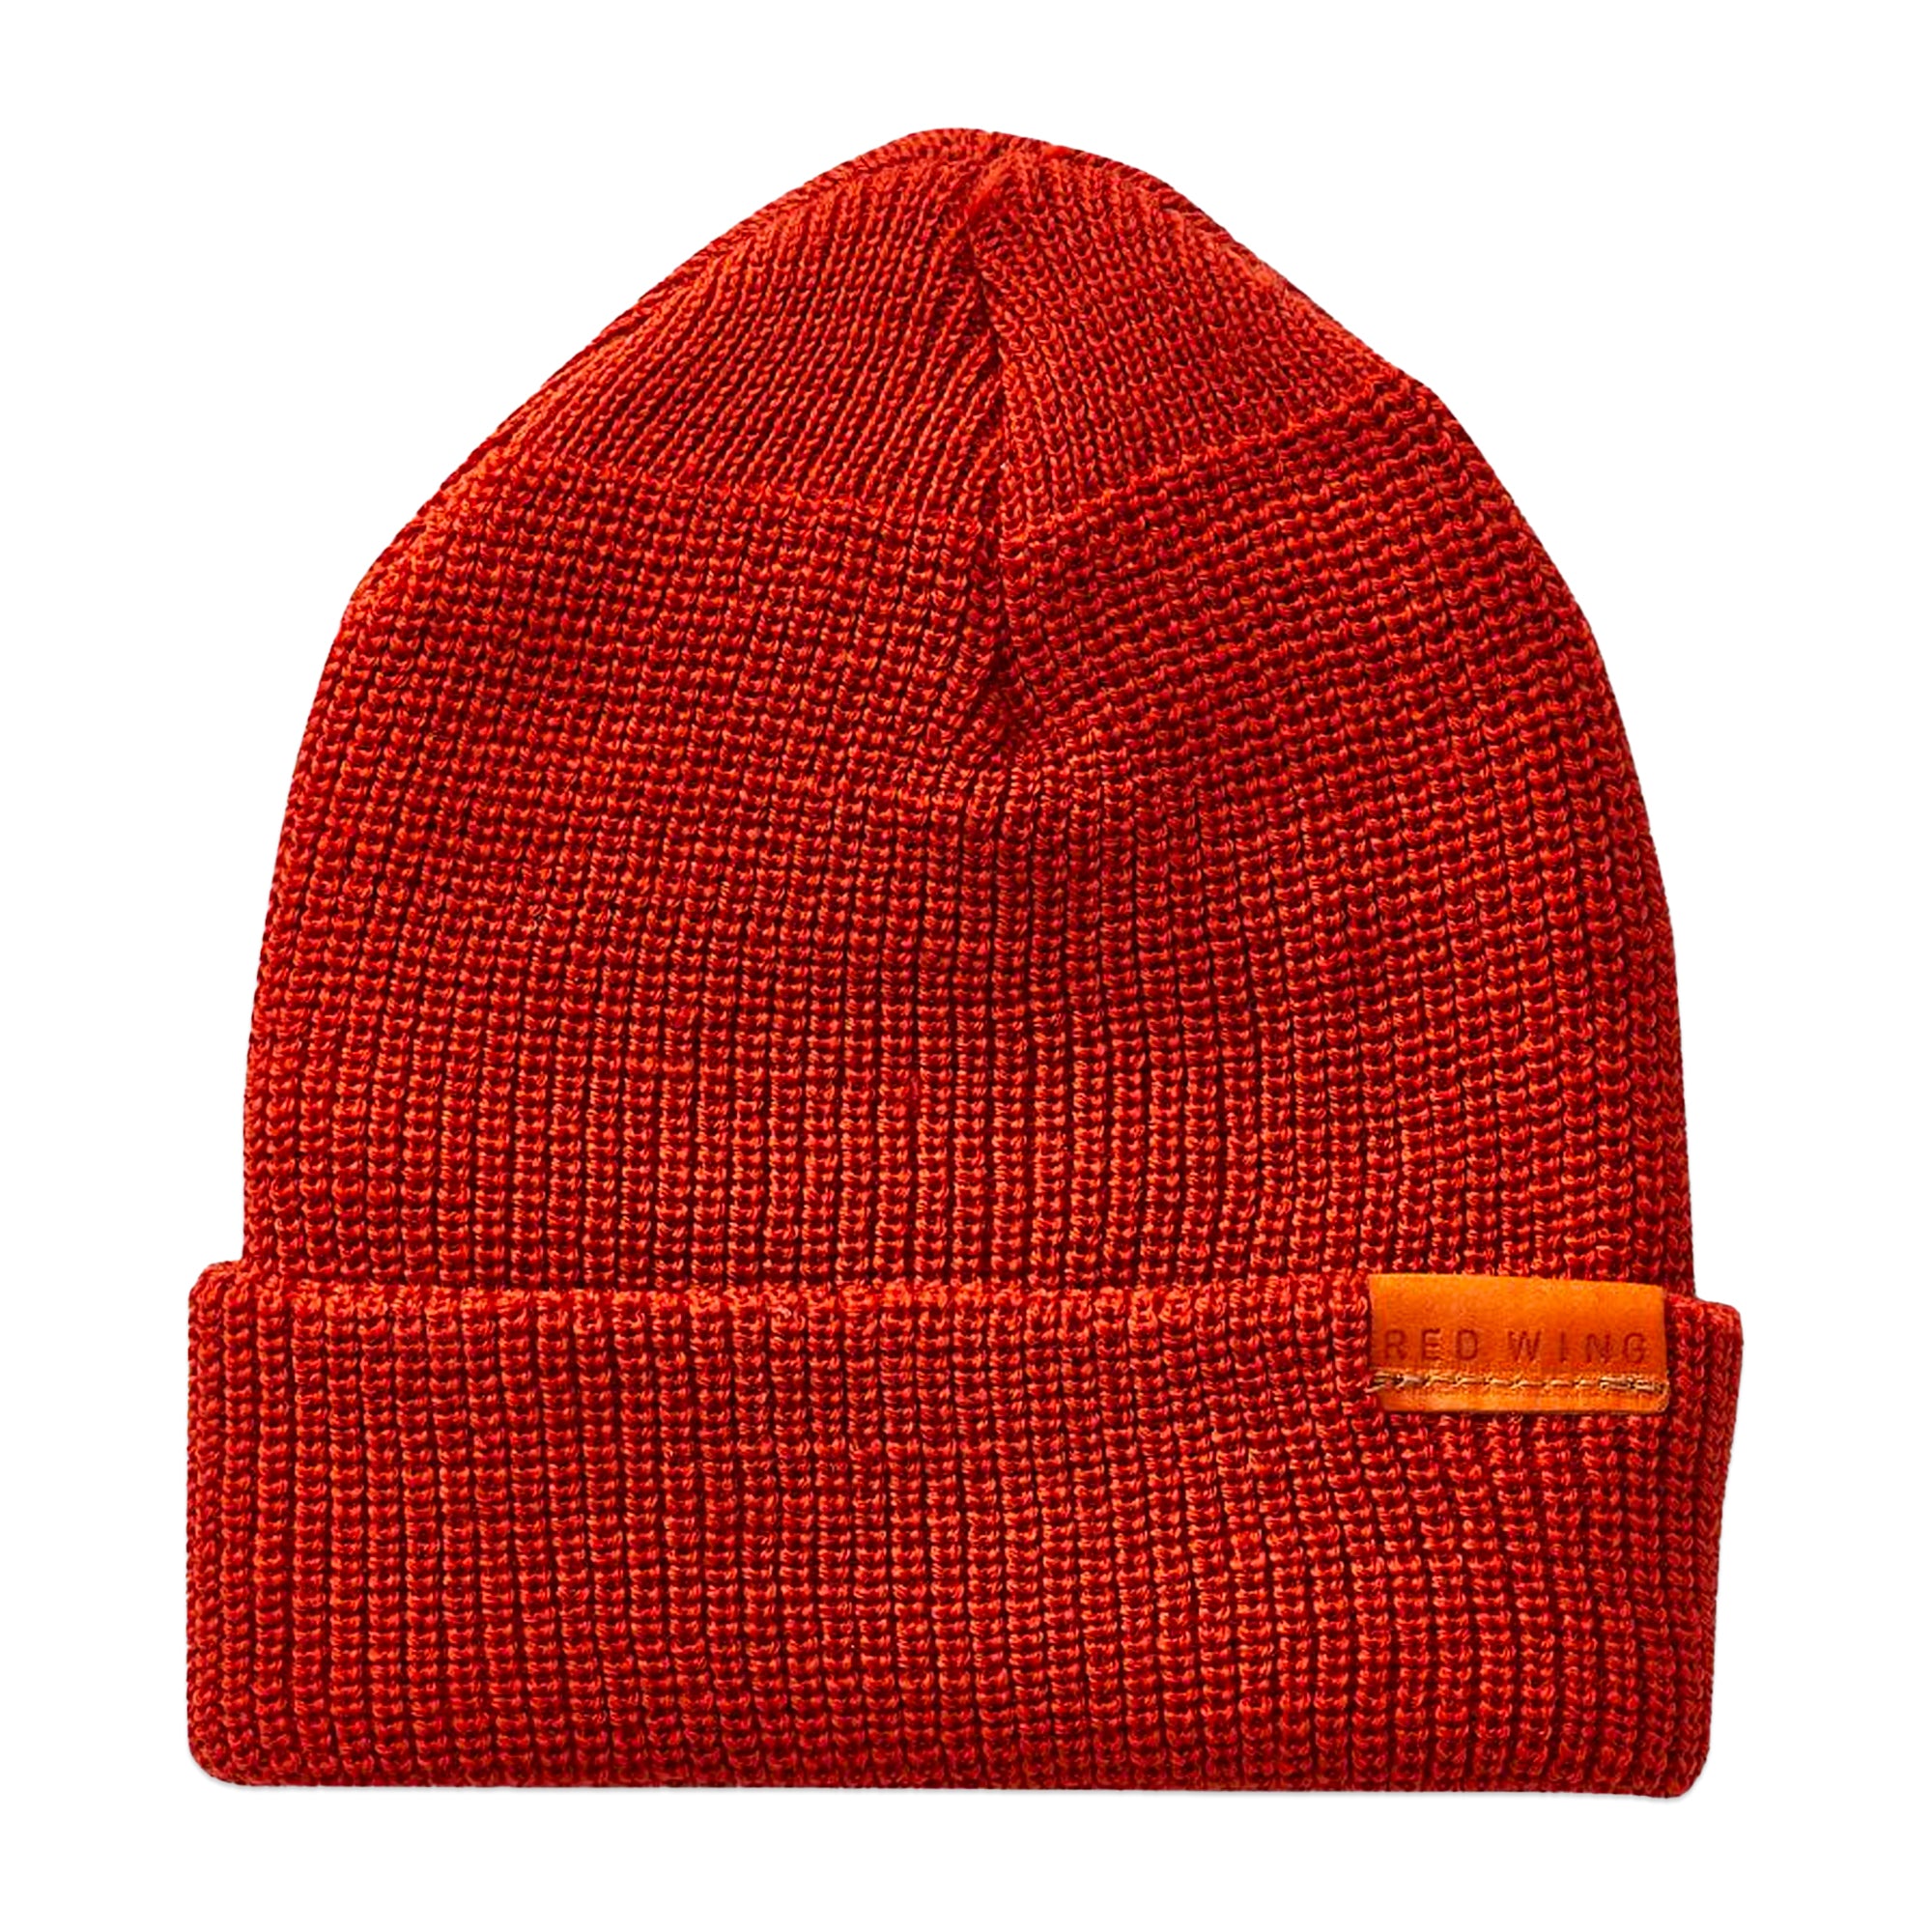 Red Wing Merino Wool Knit Beanie Hat - Rust